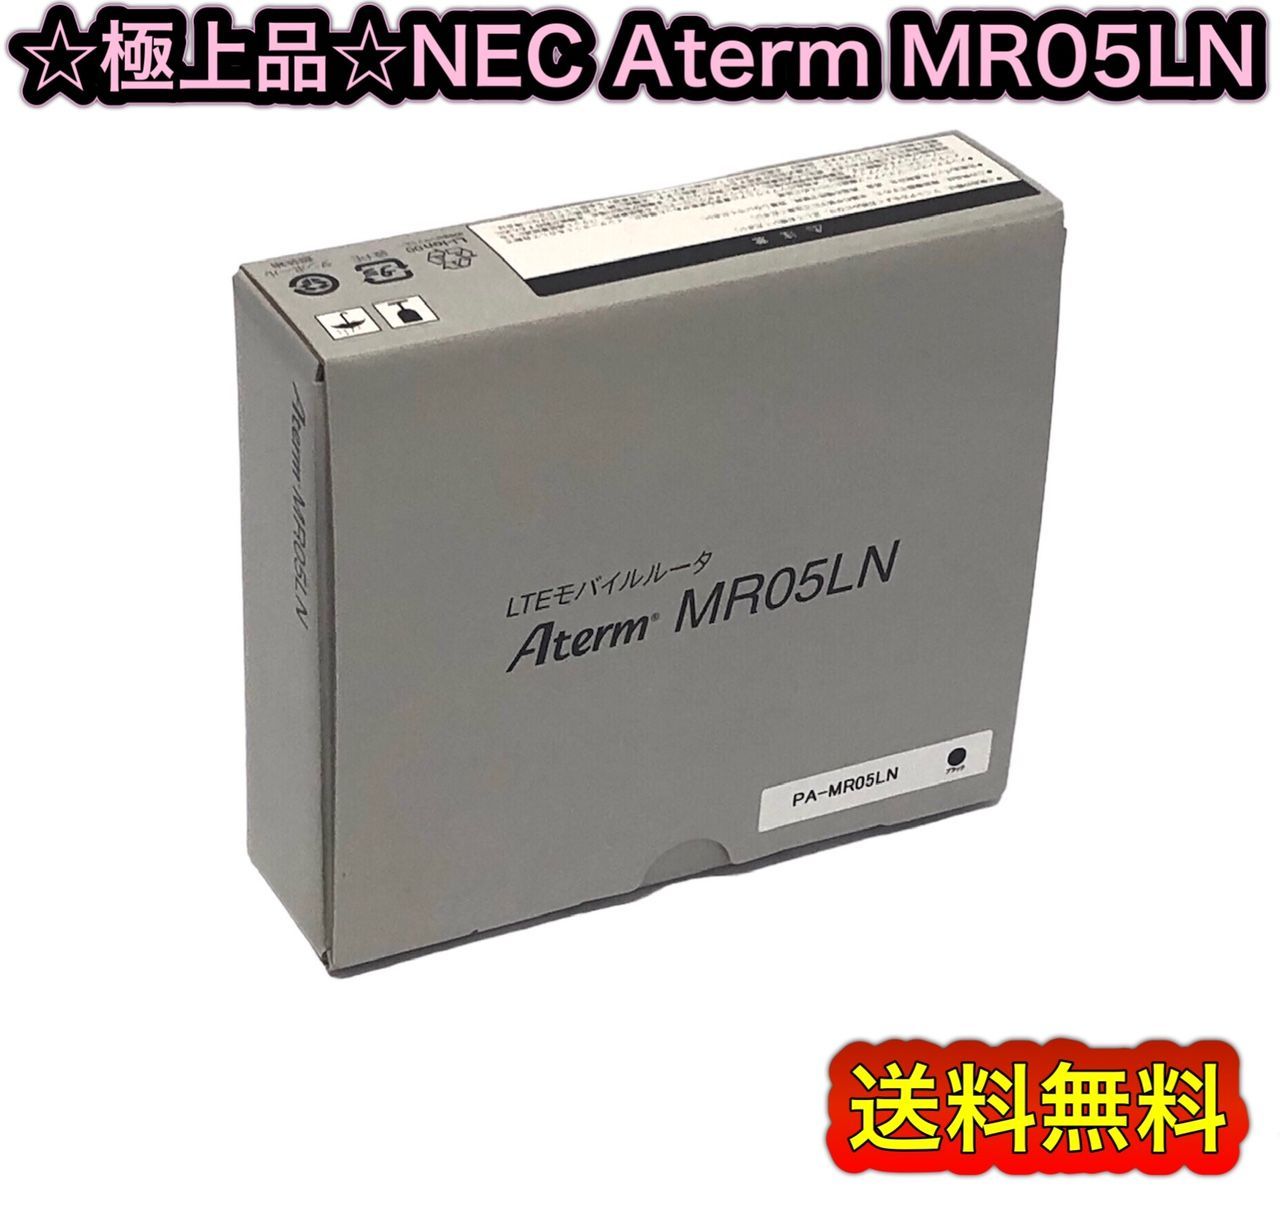 NEC LTE モバイルルーター Aterm MR05LN PA-MR05LN - PC周辺機器